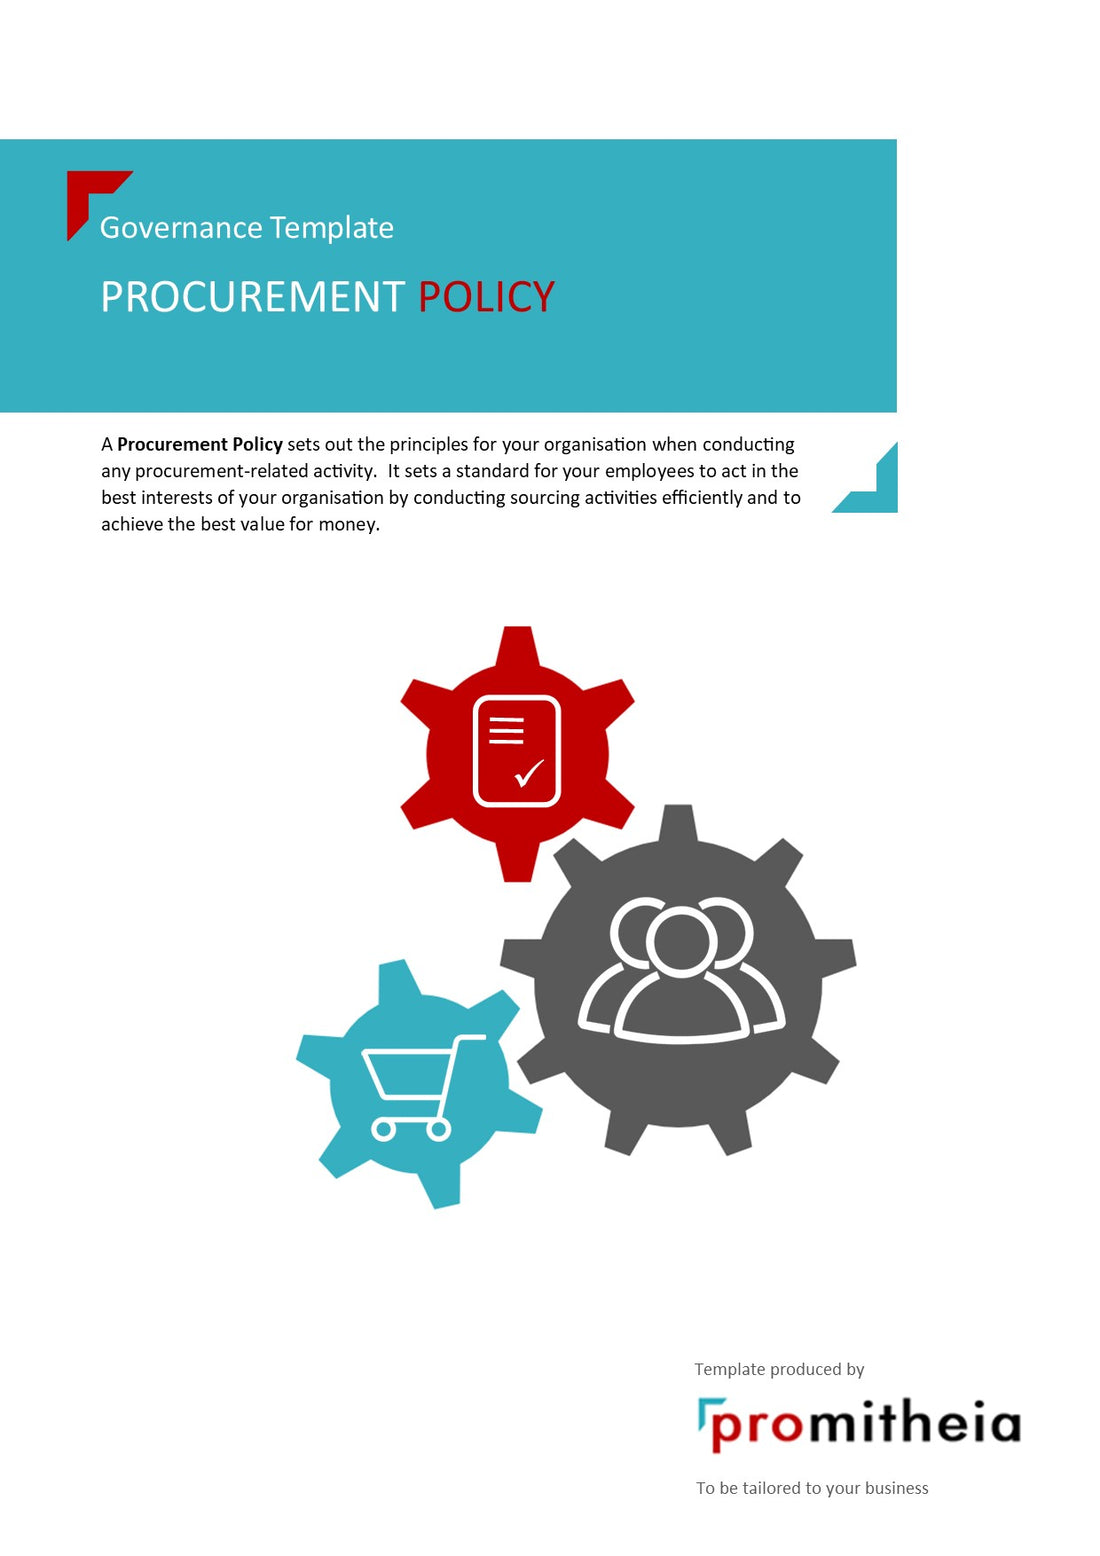 Procurement policy focus